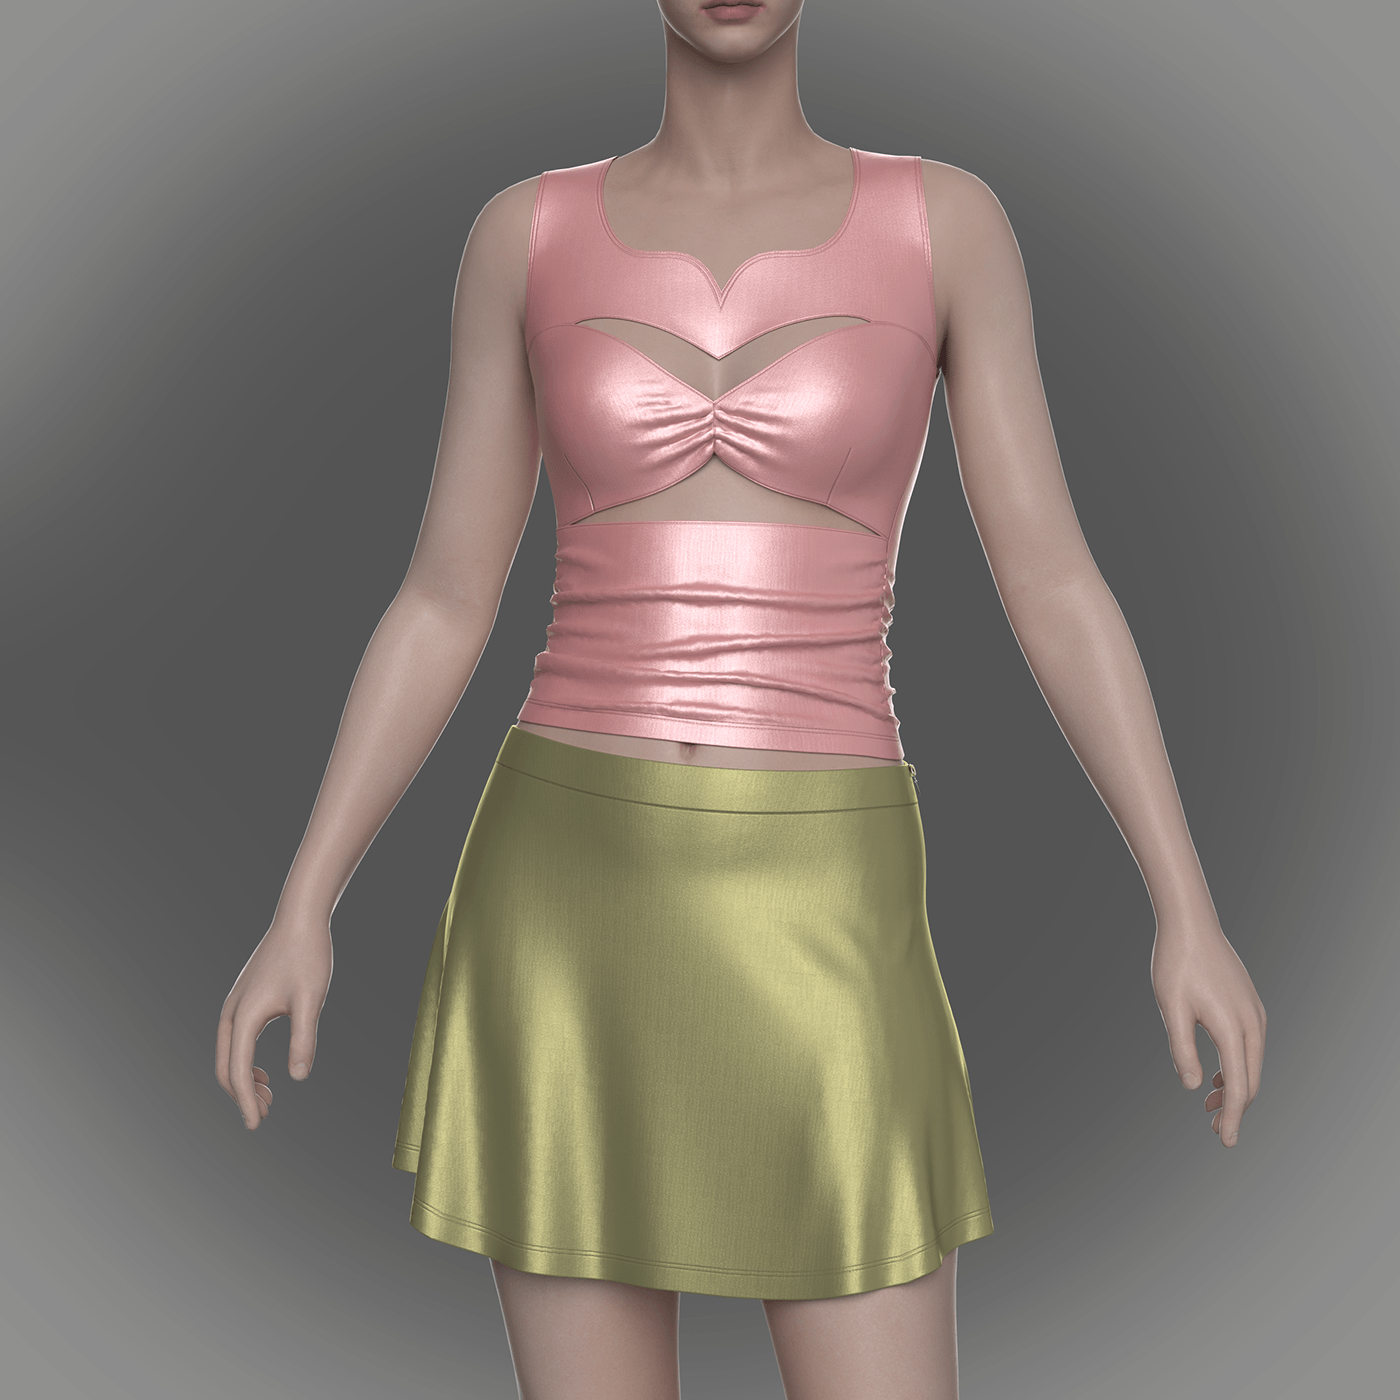 body Clo3D virtual fashion virtualfashion 3dfashion Digital Art  styling  moda Fashion  itsclo3d skirt